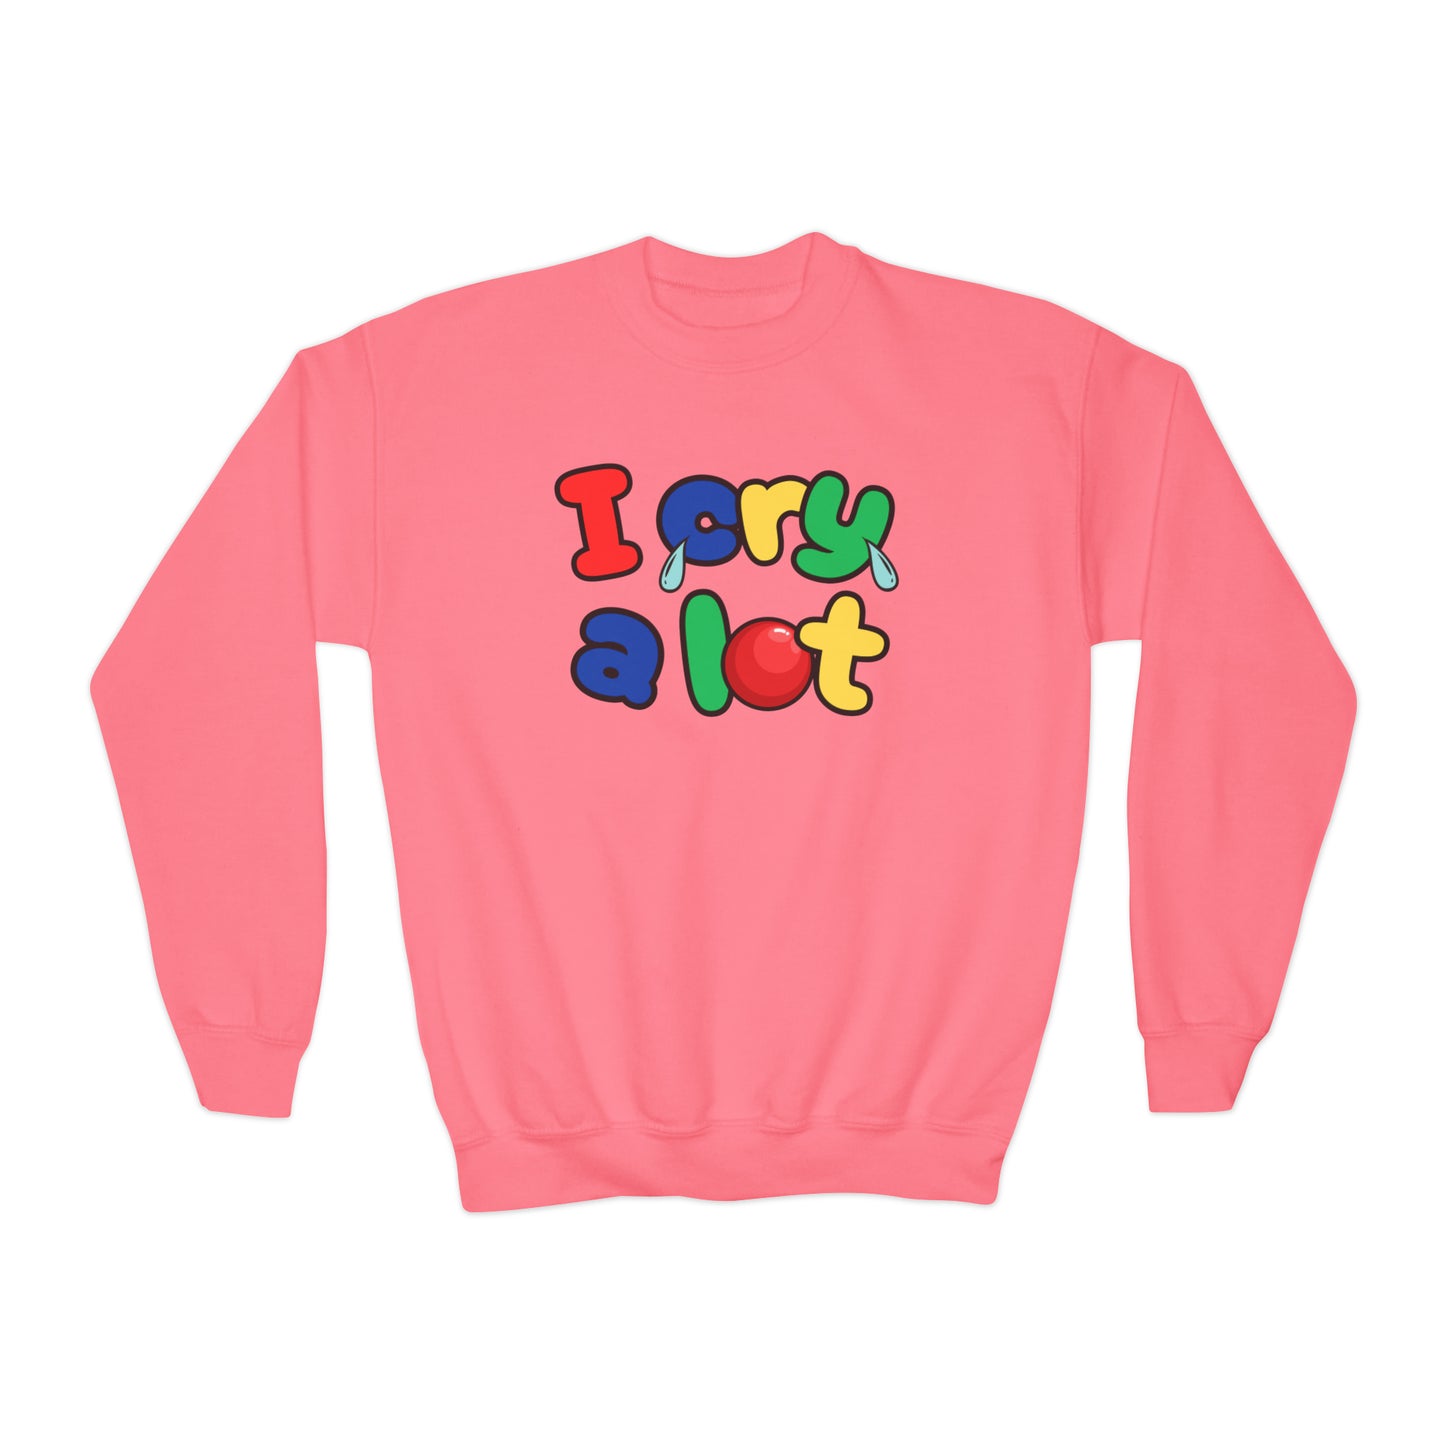 I Cry A Lot - Youth Crewneck Sweatshirt